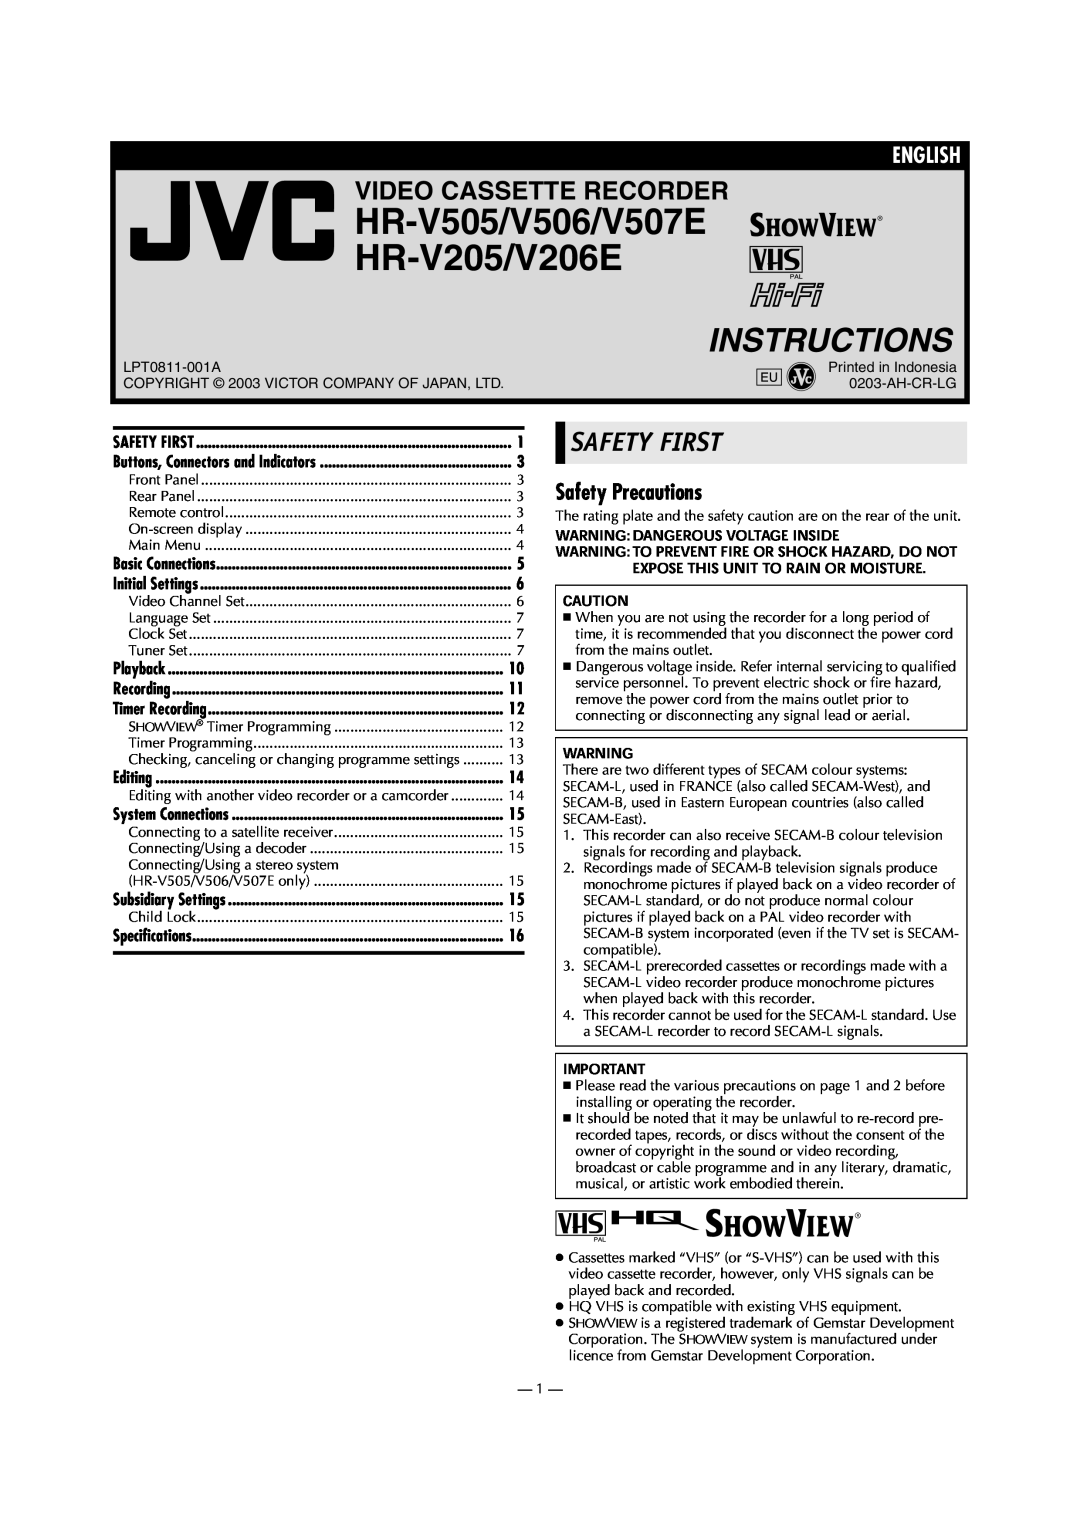 JVC HR-V505E specifications Safety First, Safety Precautions, HR-V505/V506/V507E HR-V205/V206E, Instructions, English 